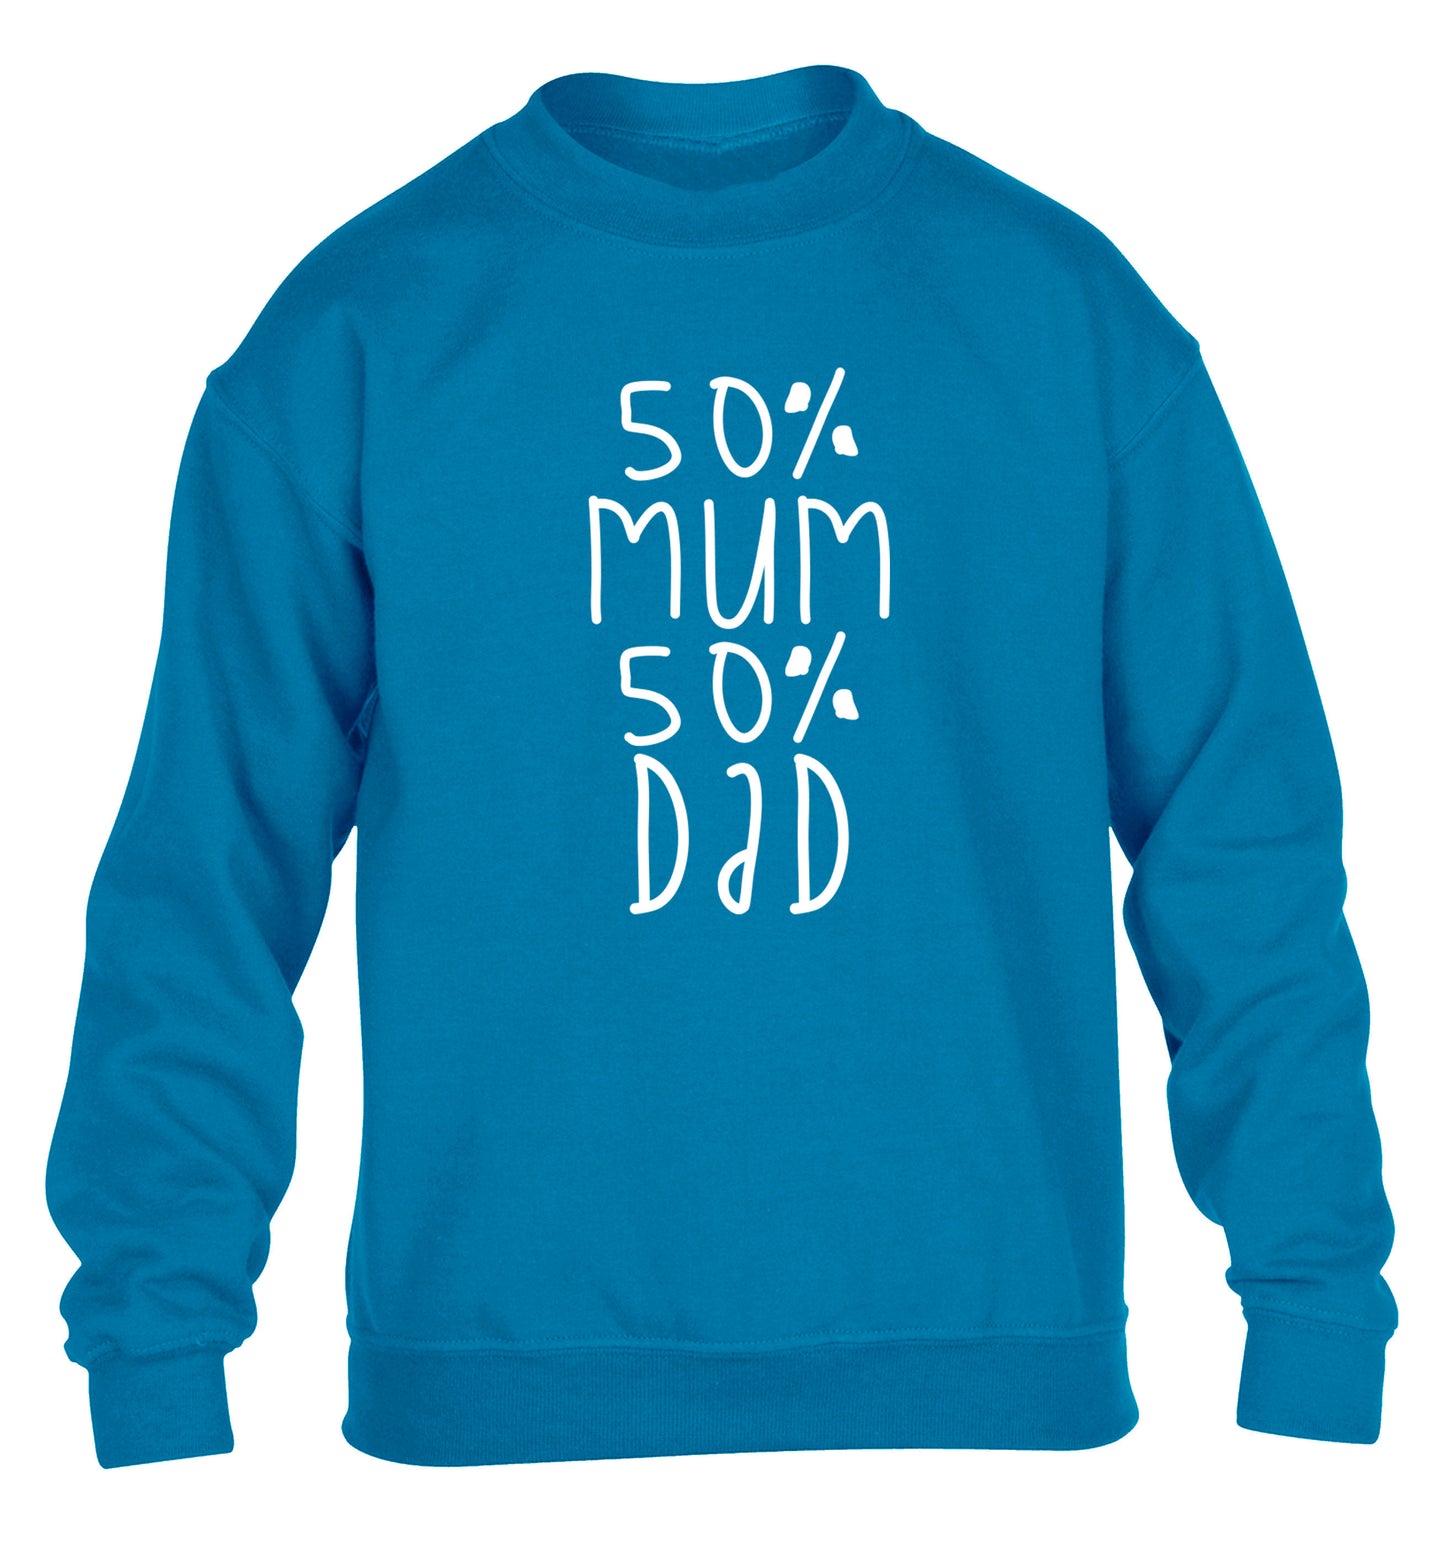 50% mum 50% dad children's blue sweater 12-14 Years